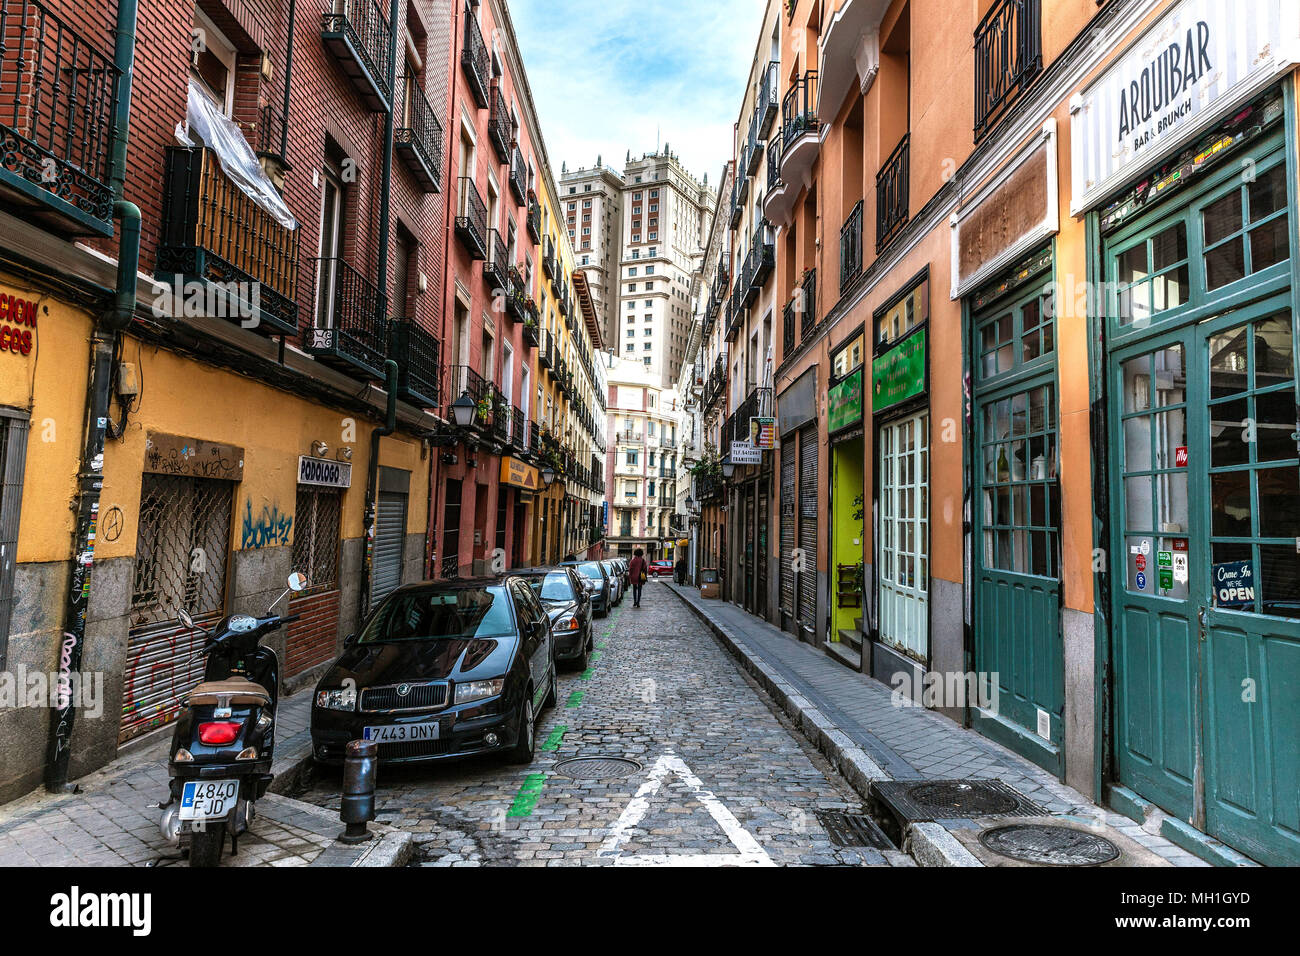 Calle Juan De Dios, street scene, Madrid, Spain. Stock Photo